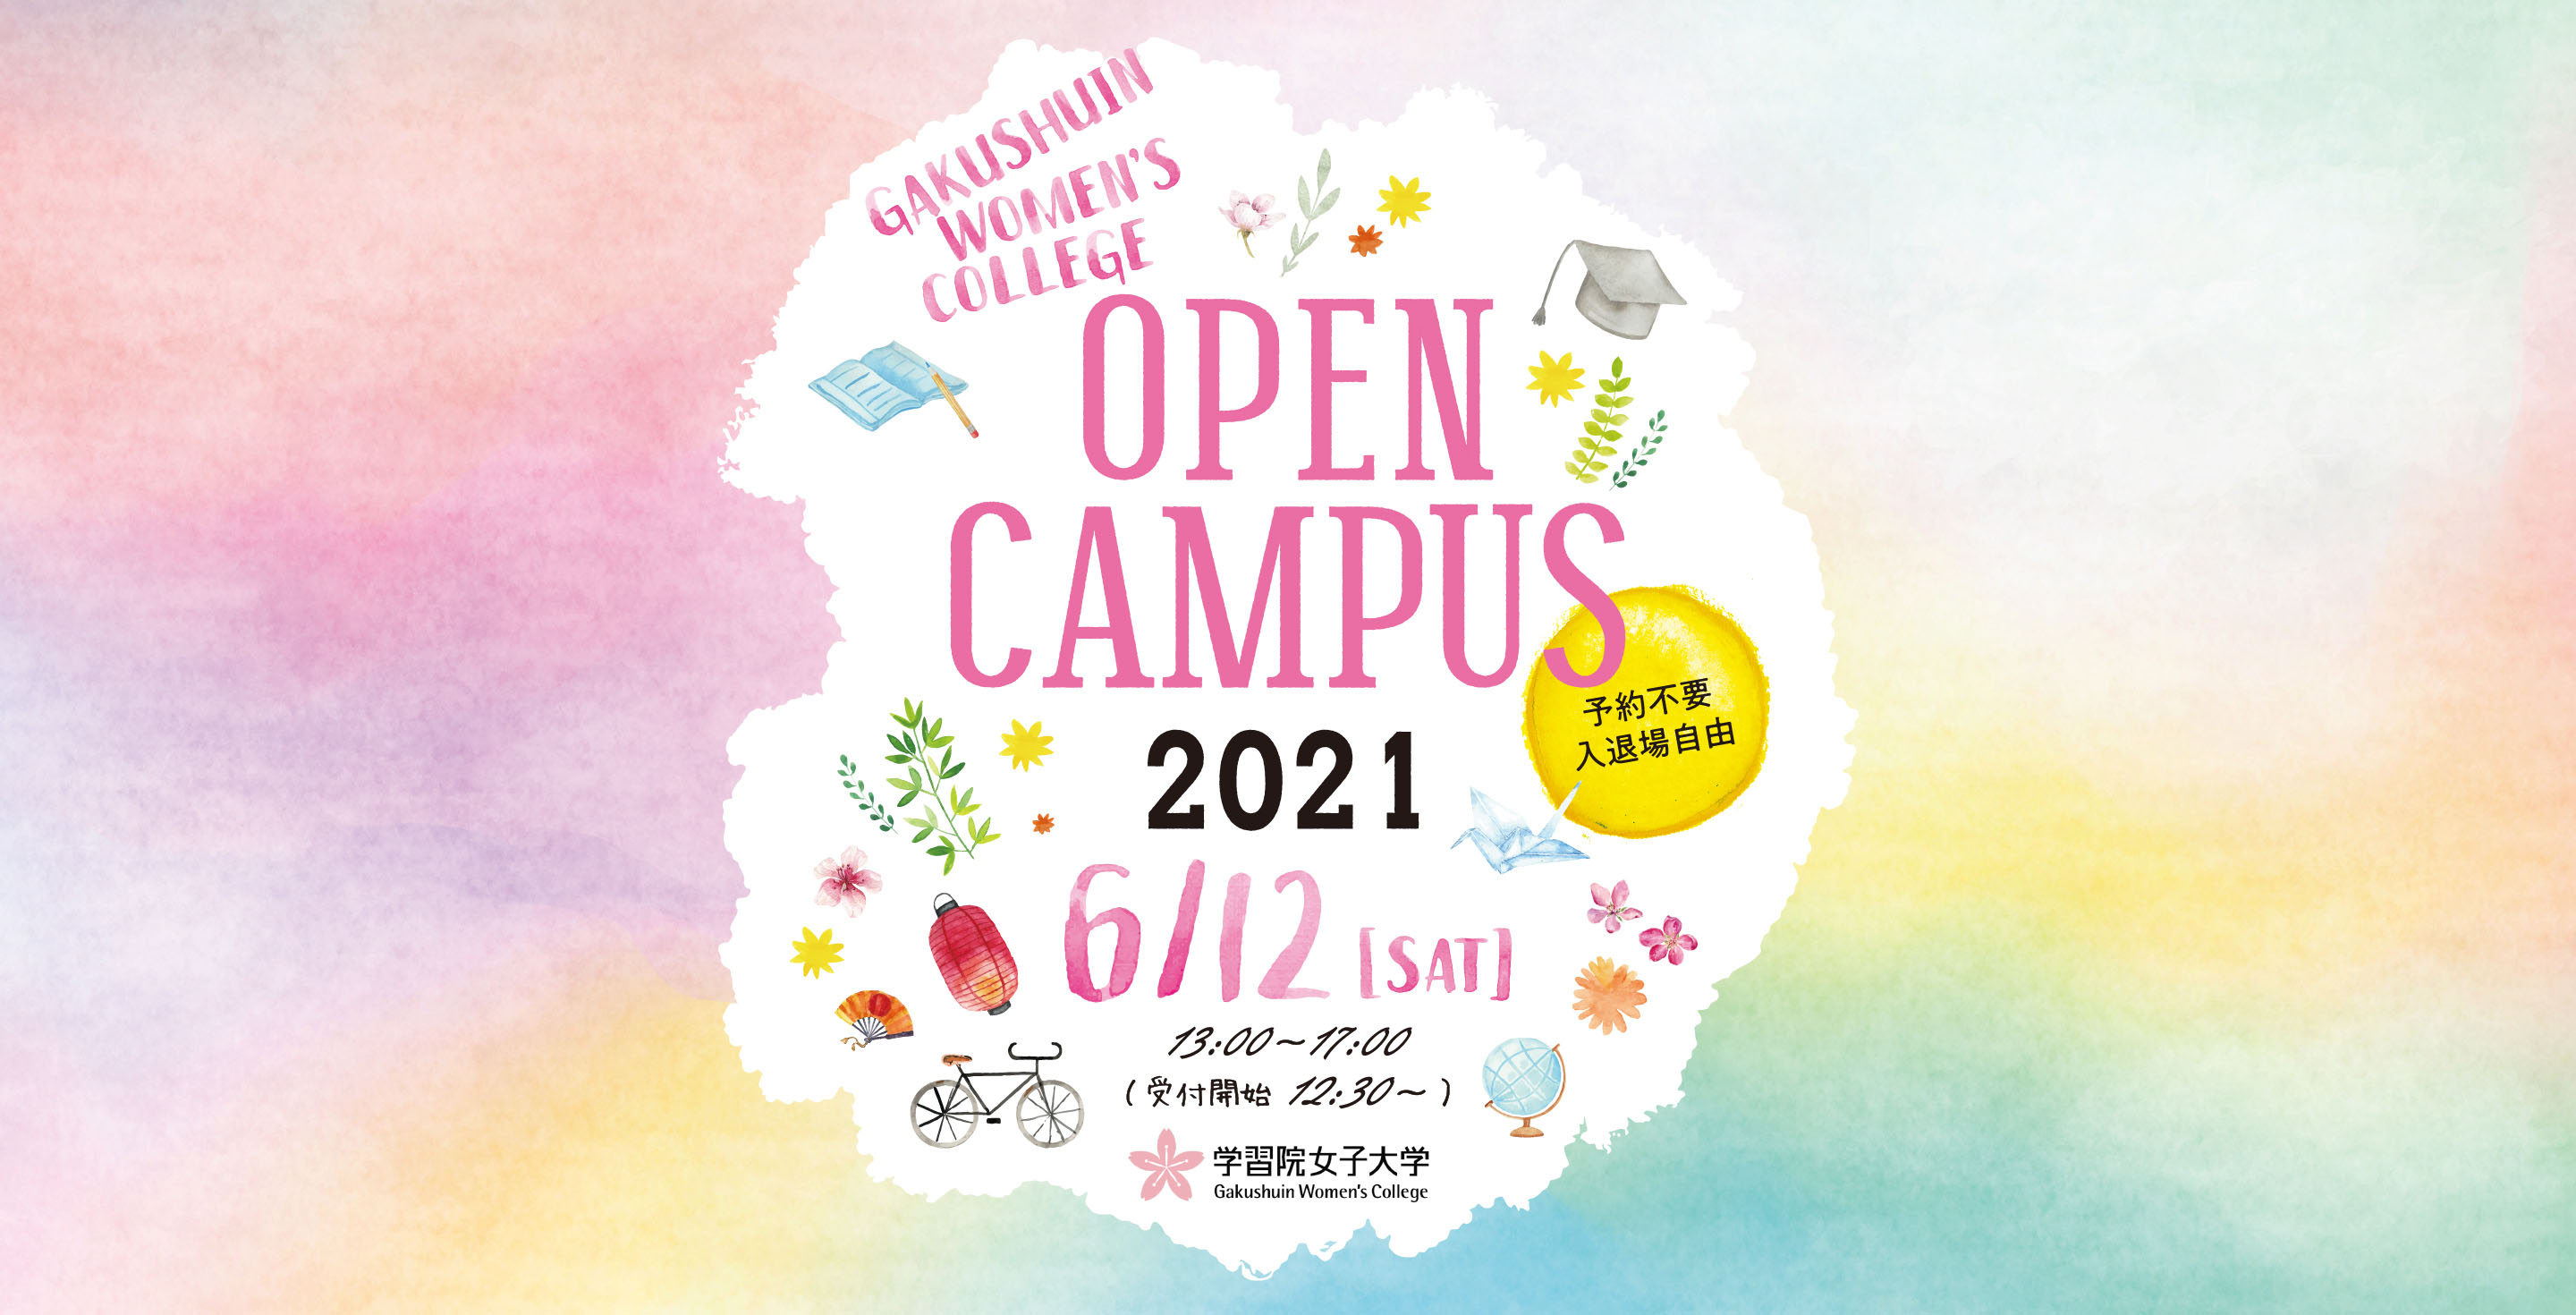 OPEN CAMPUS 2021 6/12(SAT) 学習院女子大学